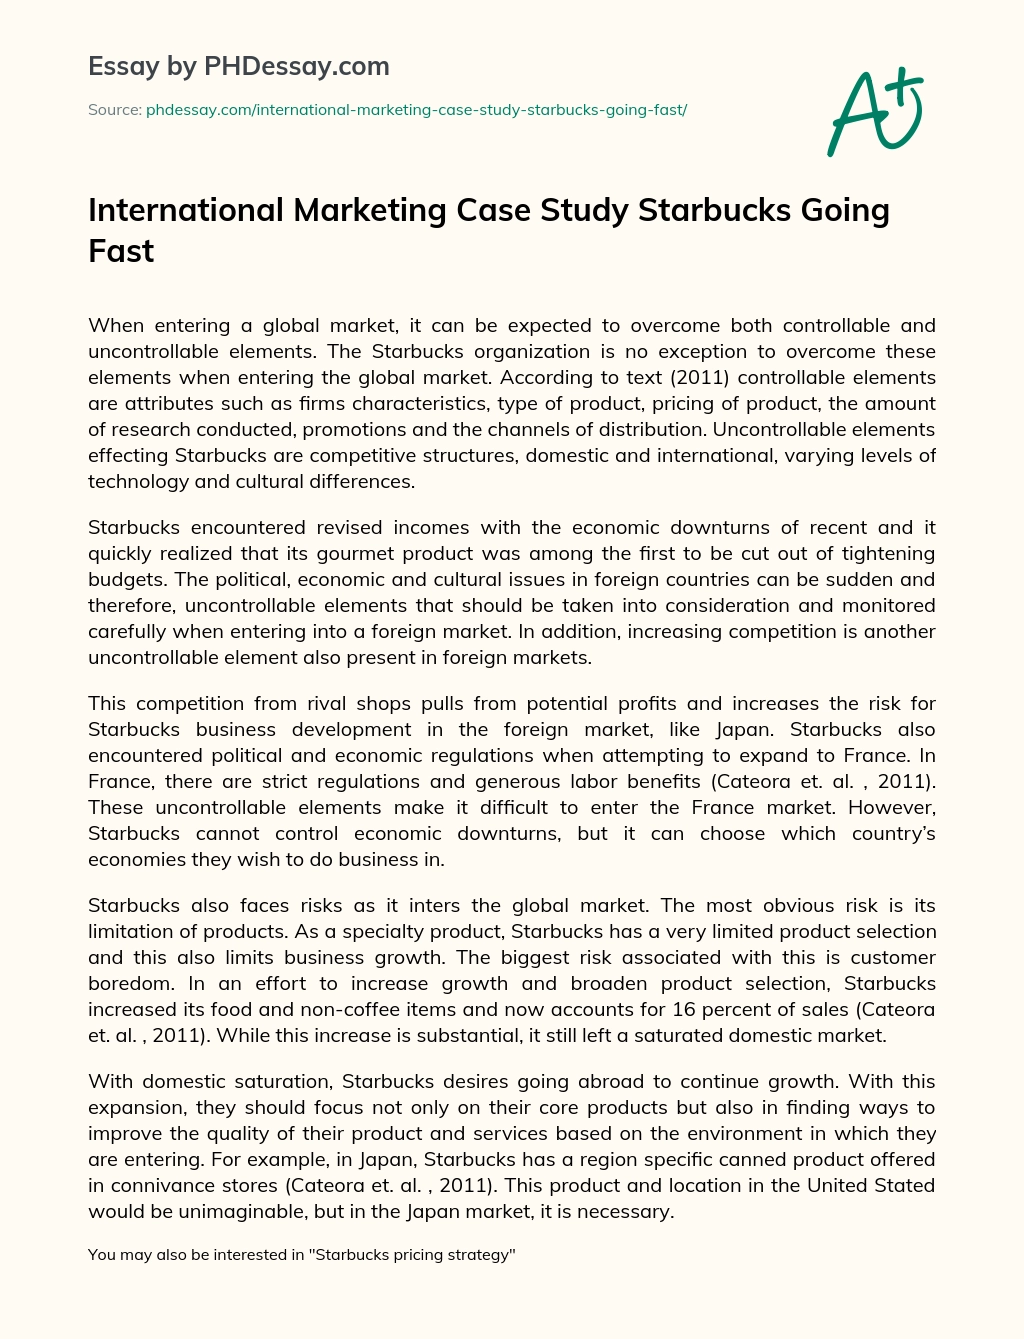 International Marketing Case Study Starbucks Going Fast essay